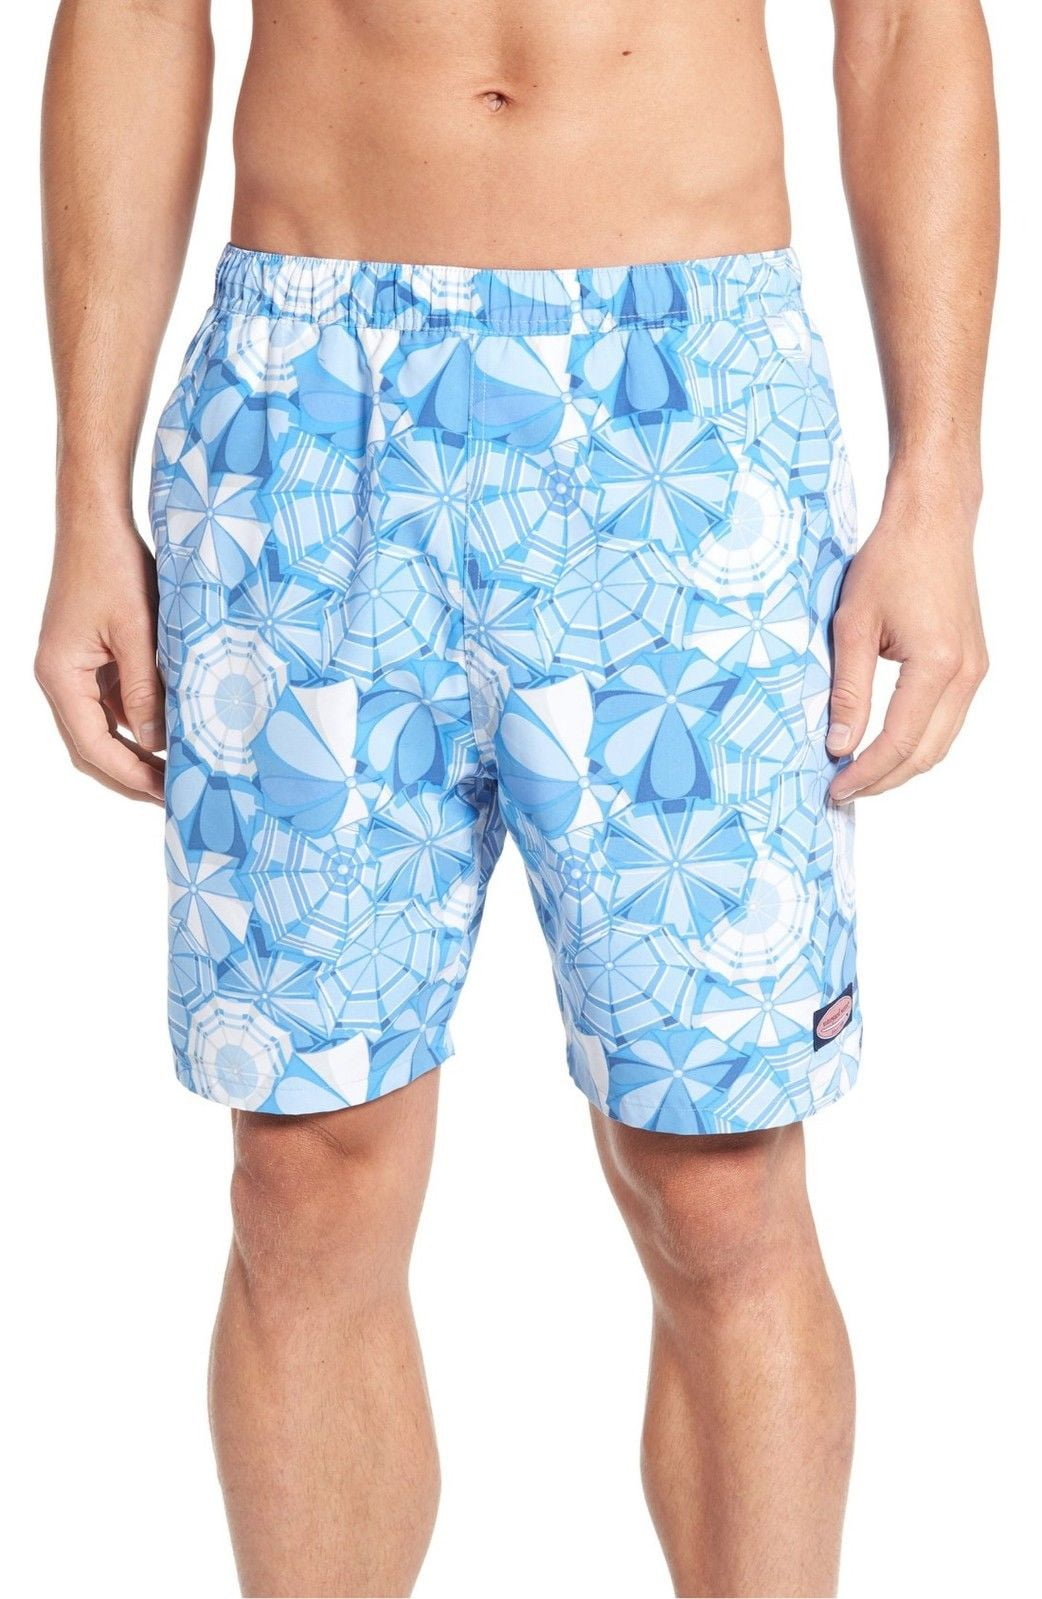 Men Swim Trunks Summer Cool Quick Dry Board Shorts Suit with Cloud Photo Men